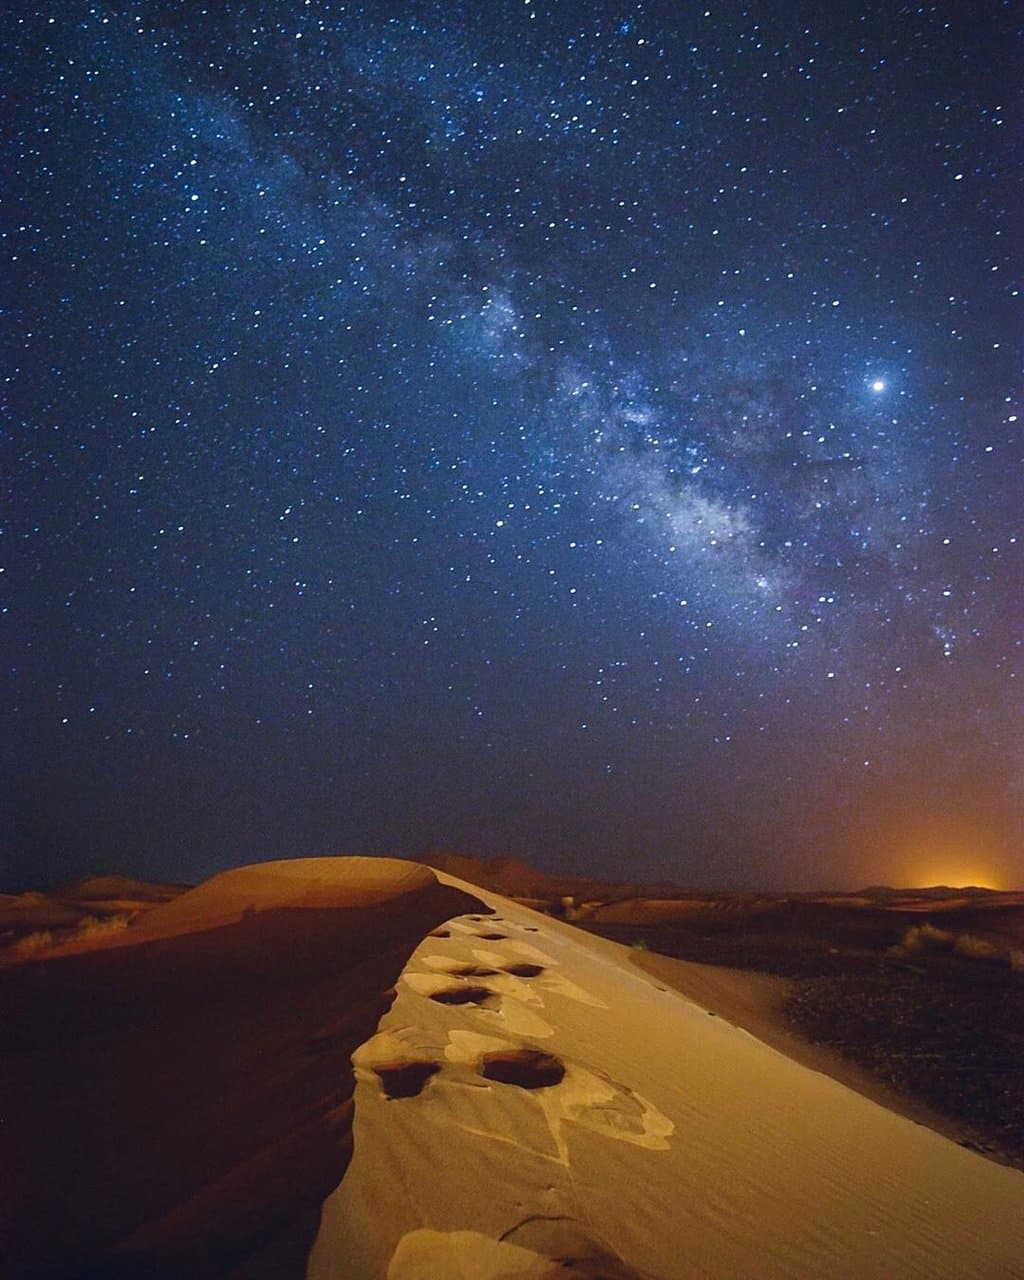 The starry sky over the Sahara